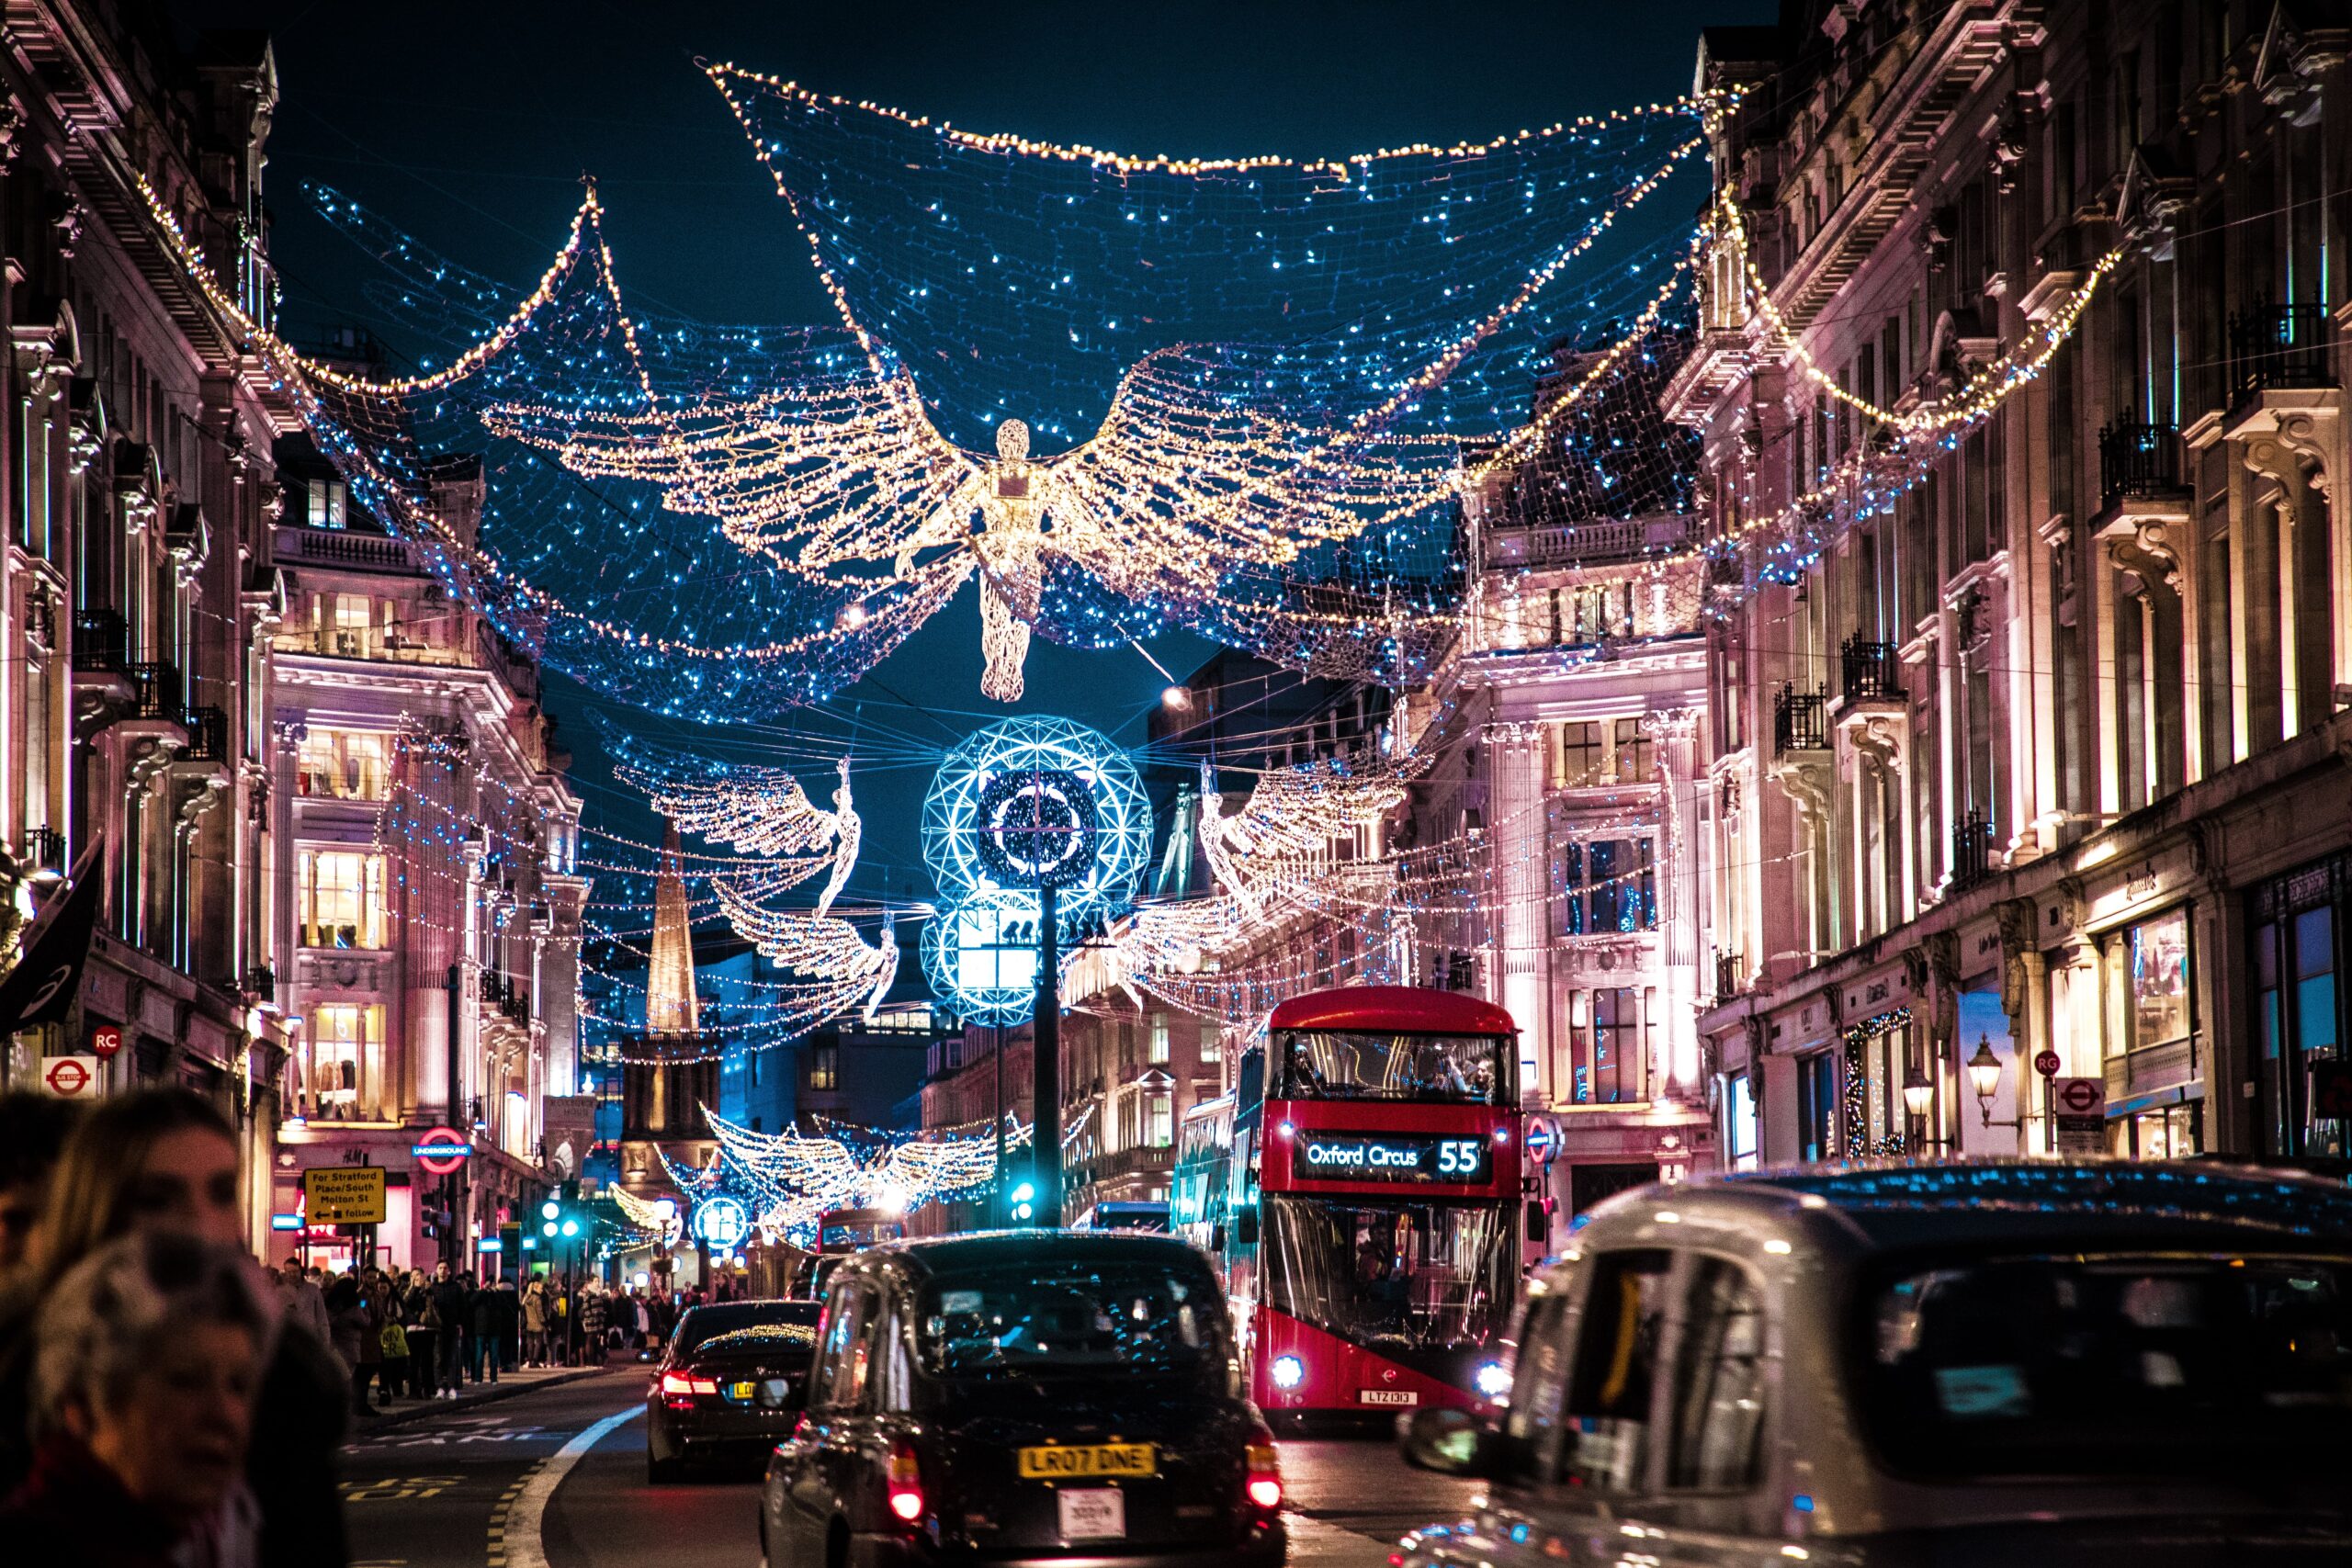 Regent Street, London, United Kingdom